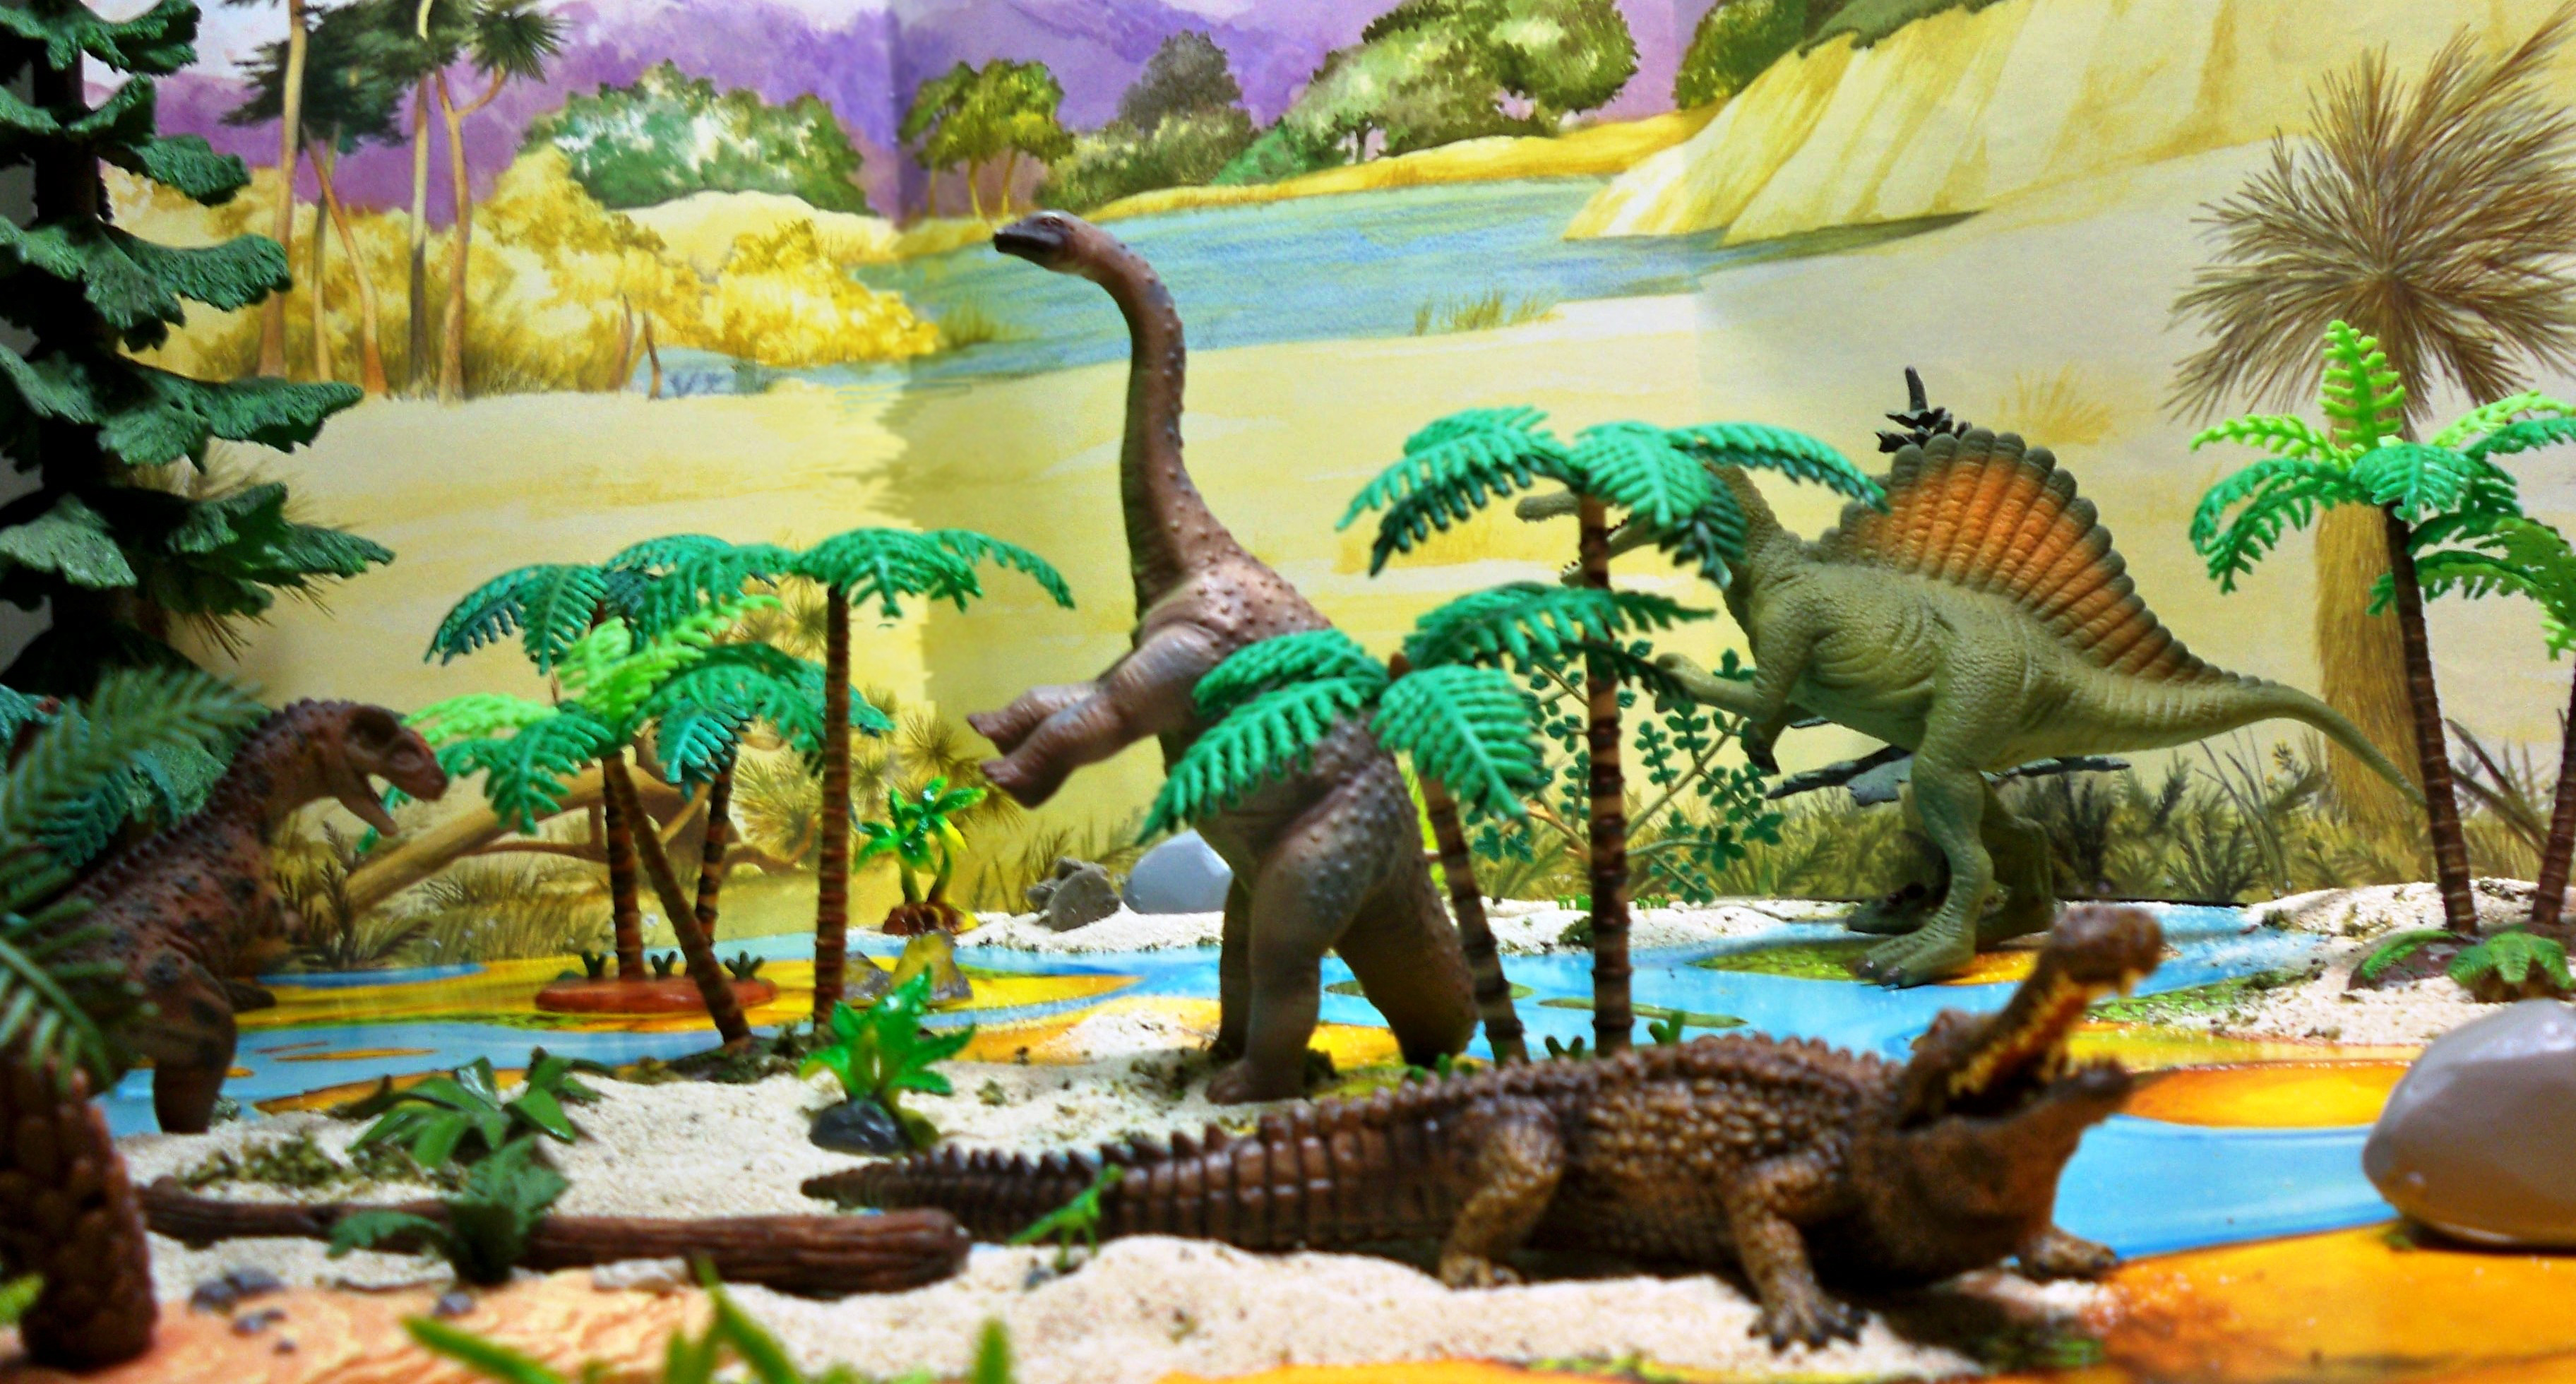 Procon Spinosaurus, Rugops, Paralititan and Sarcosuchus.